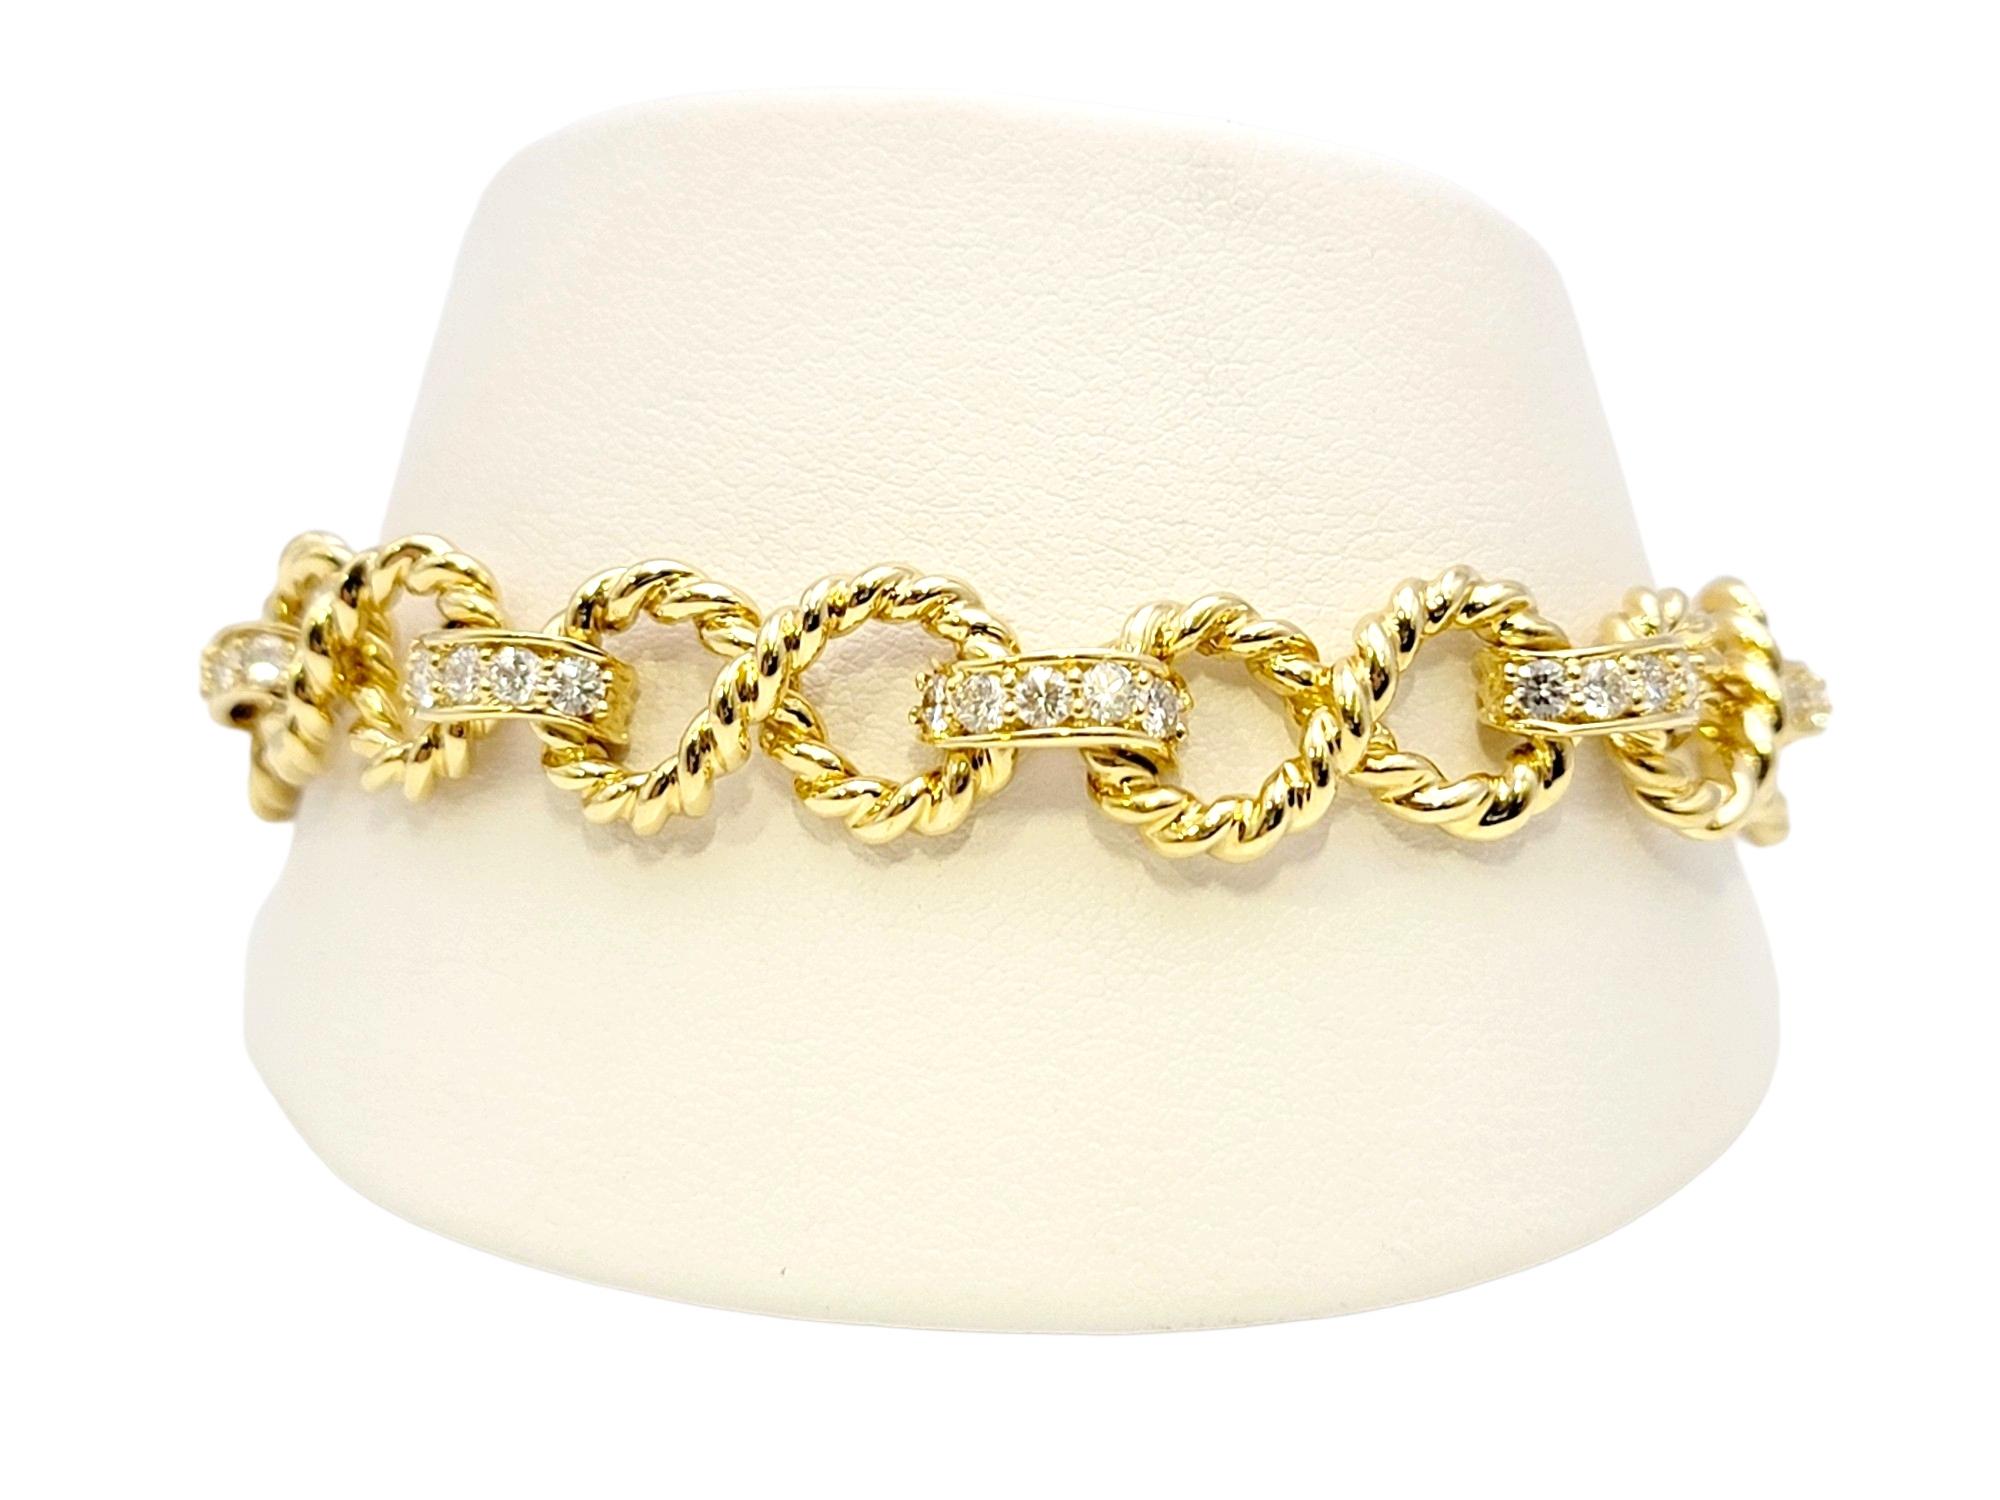 Vintage Tiffany & Co. Infinity Link Bracelet with Diamonds 18 Karat Yellow Gold 5